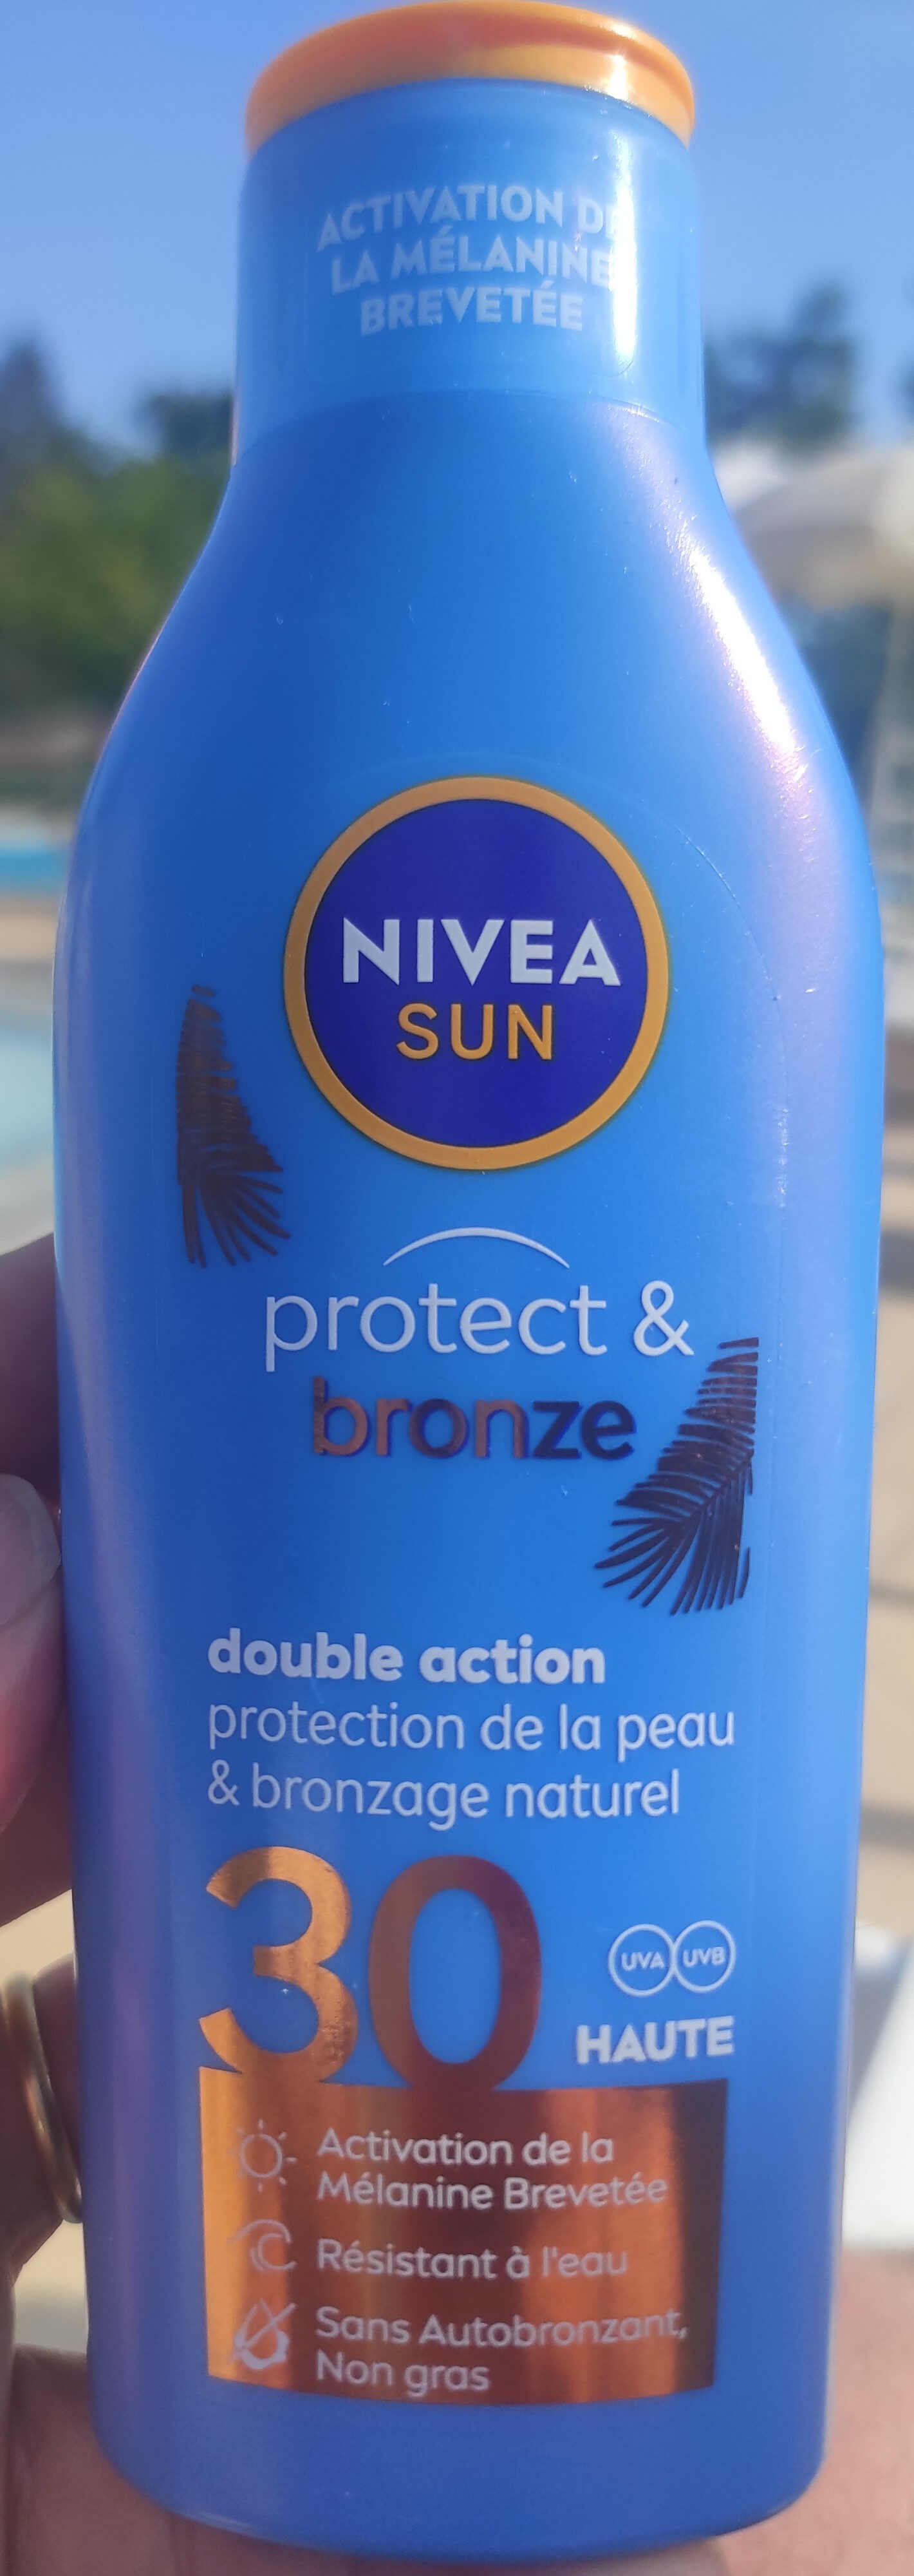 Nivea Sun protect & bronze - Produit - fr